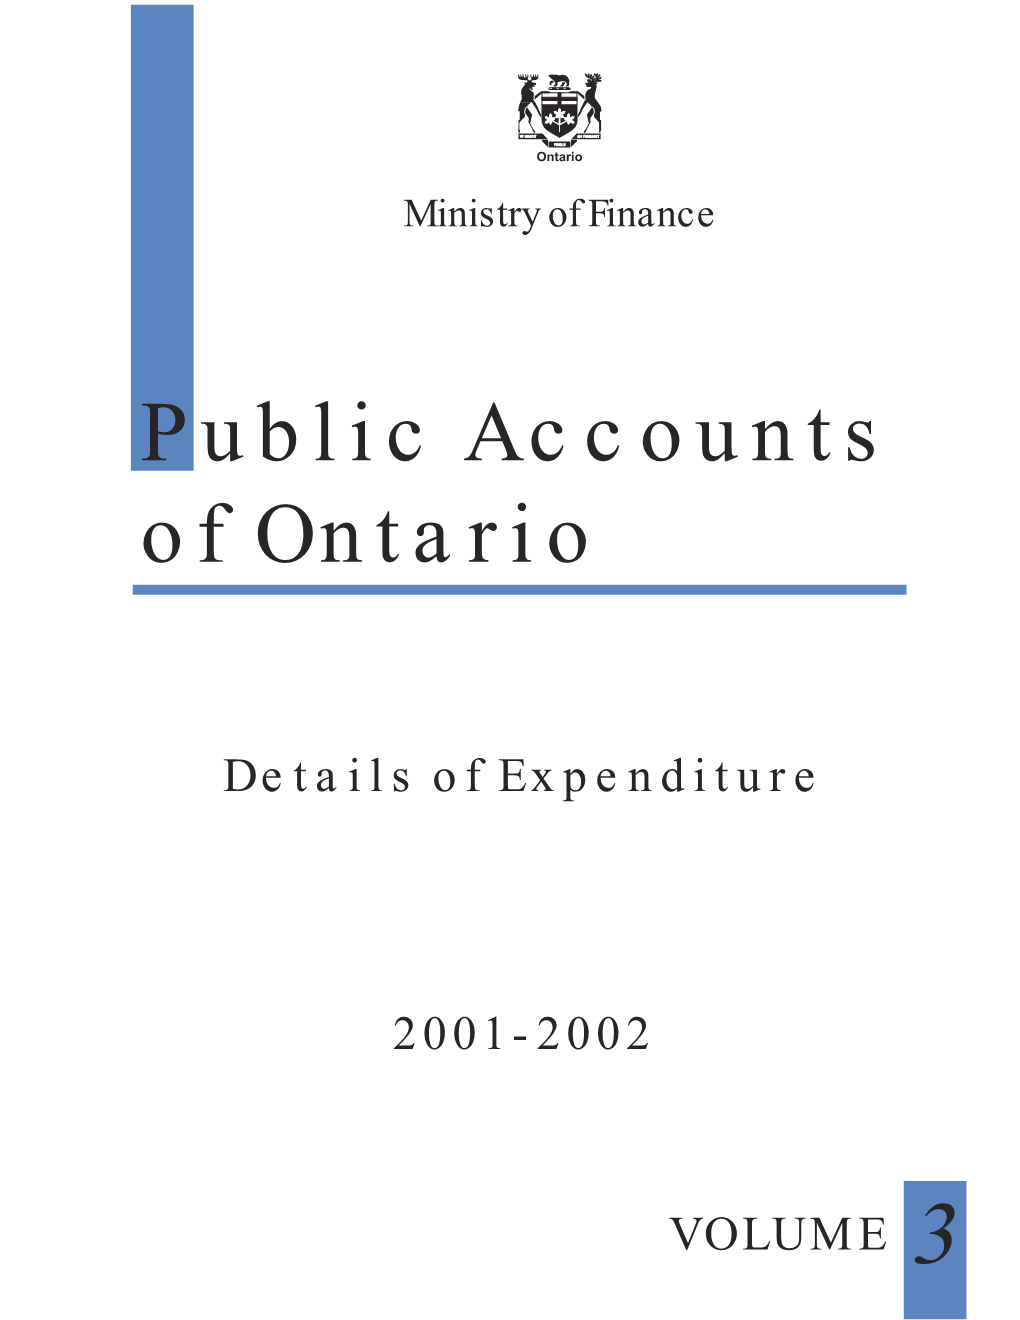 2001-2002 Public Accounts of Ontario